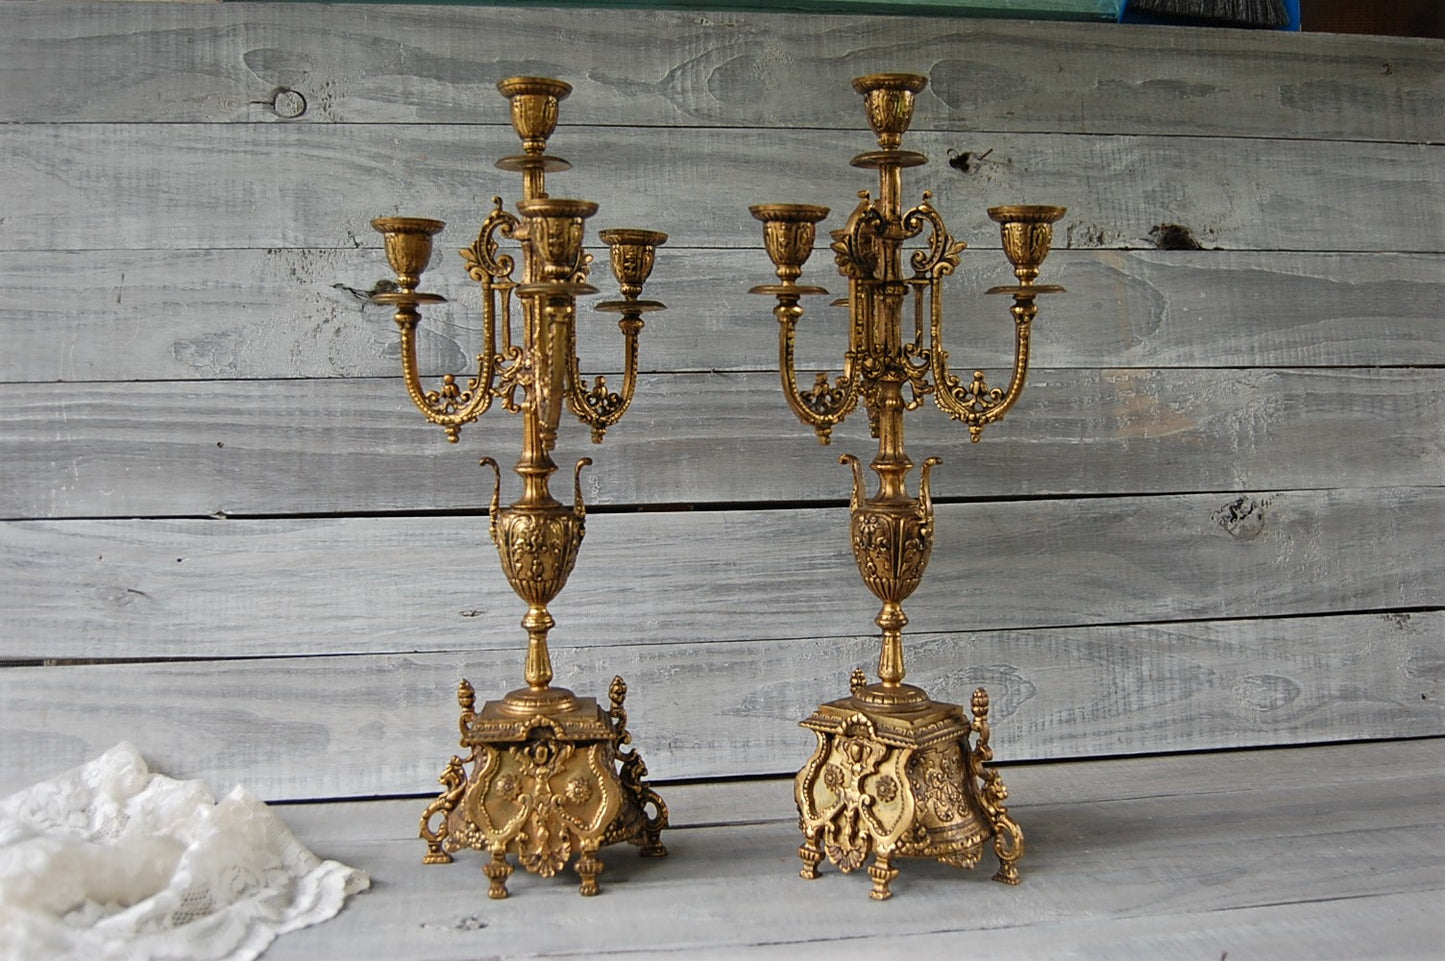 Antique bronze candelabras